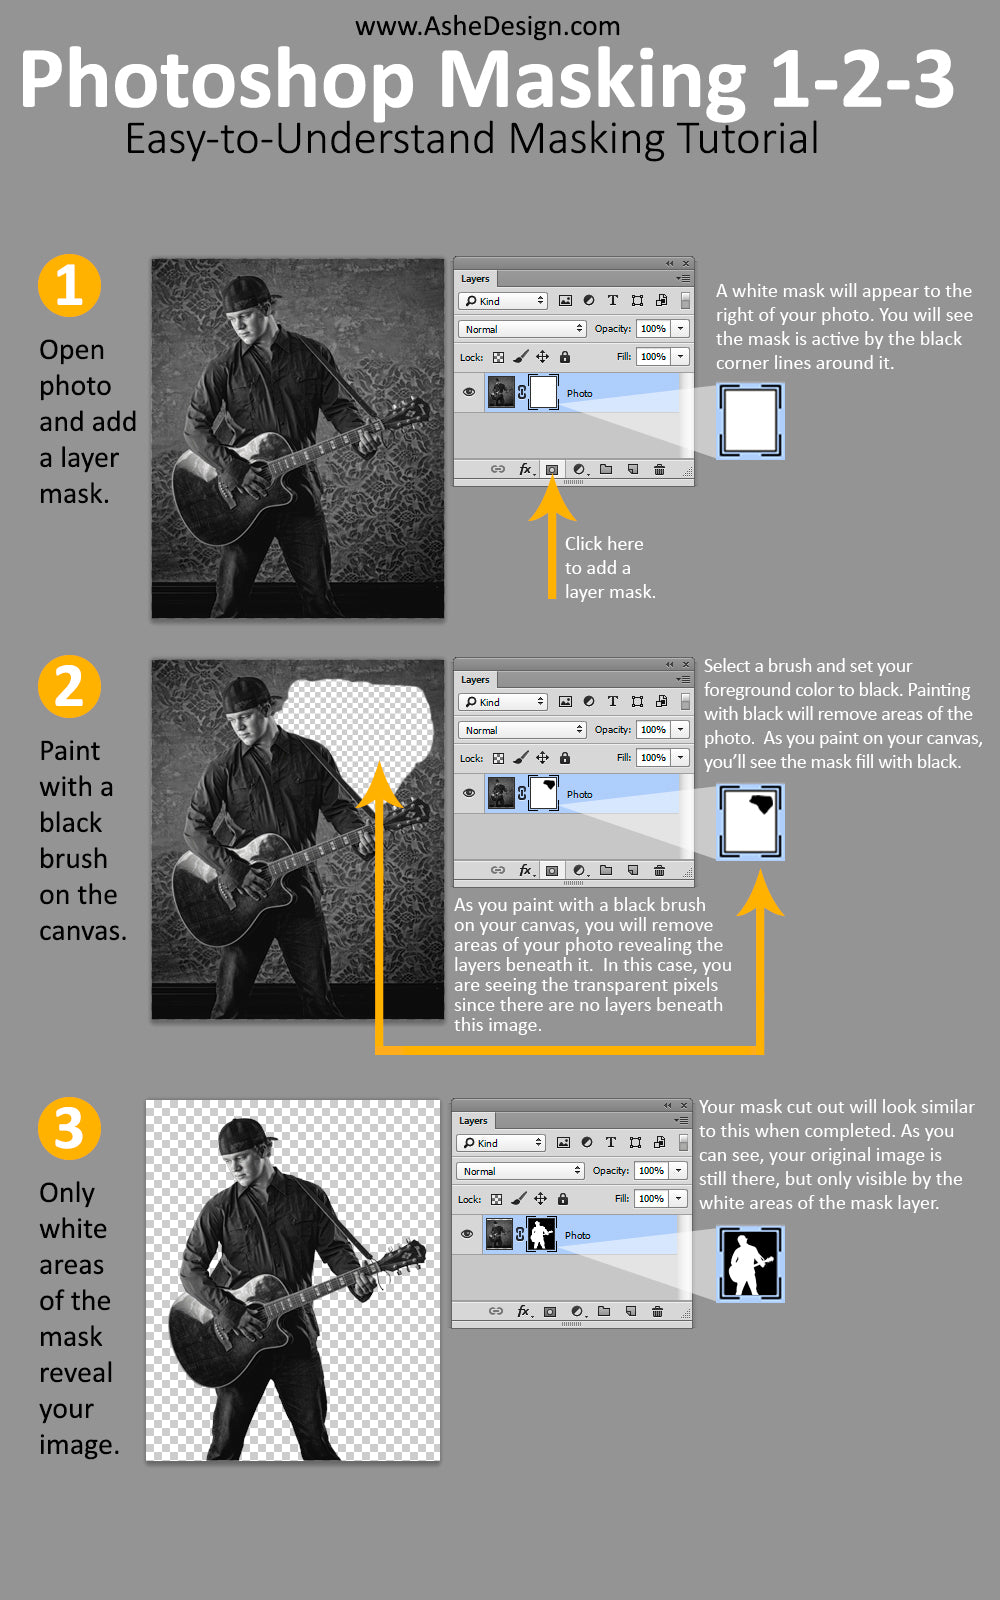 photoshop infographic tutorial